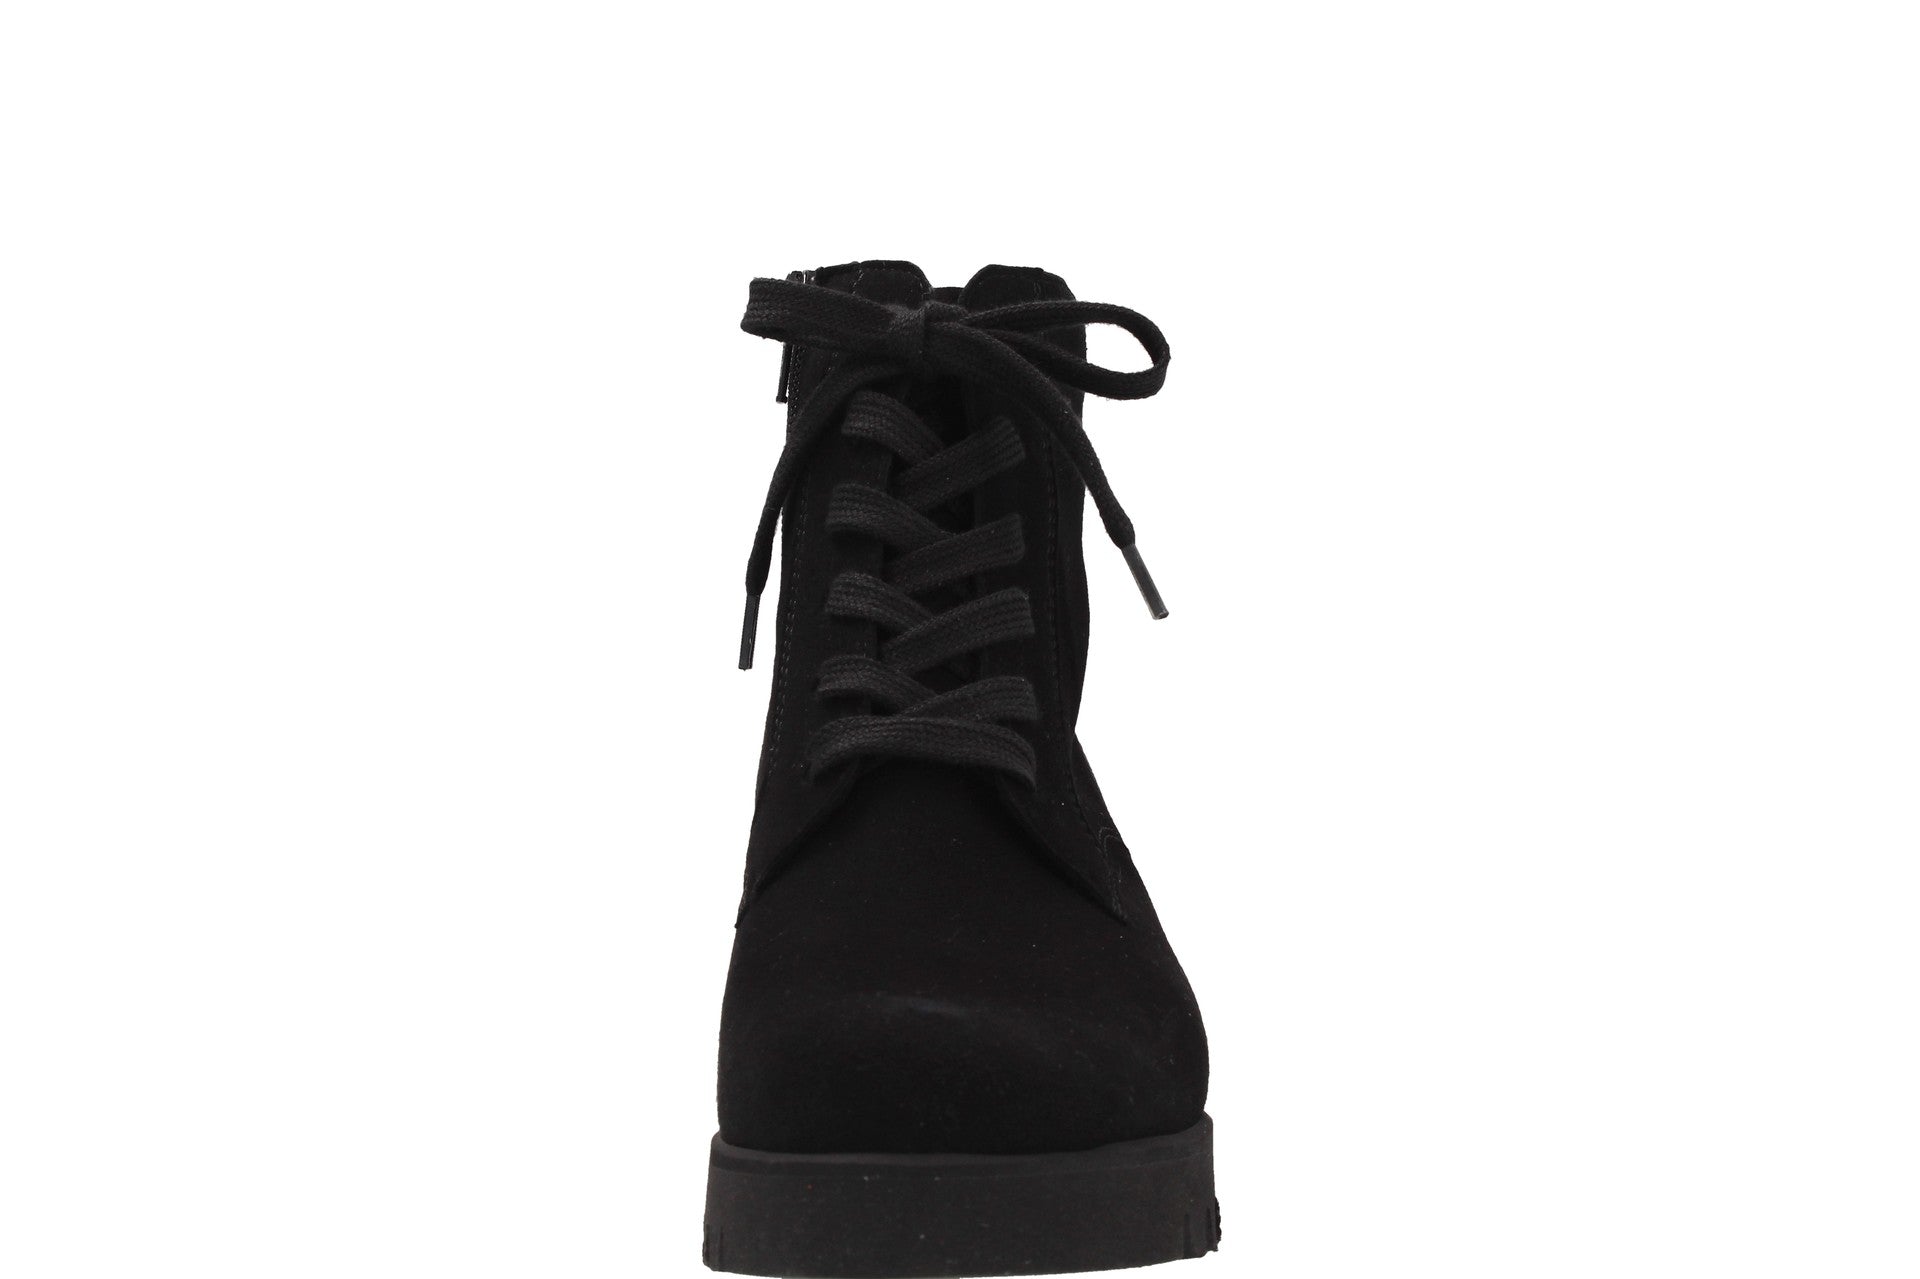 Mira – black – boots